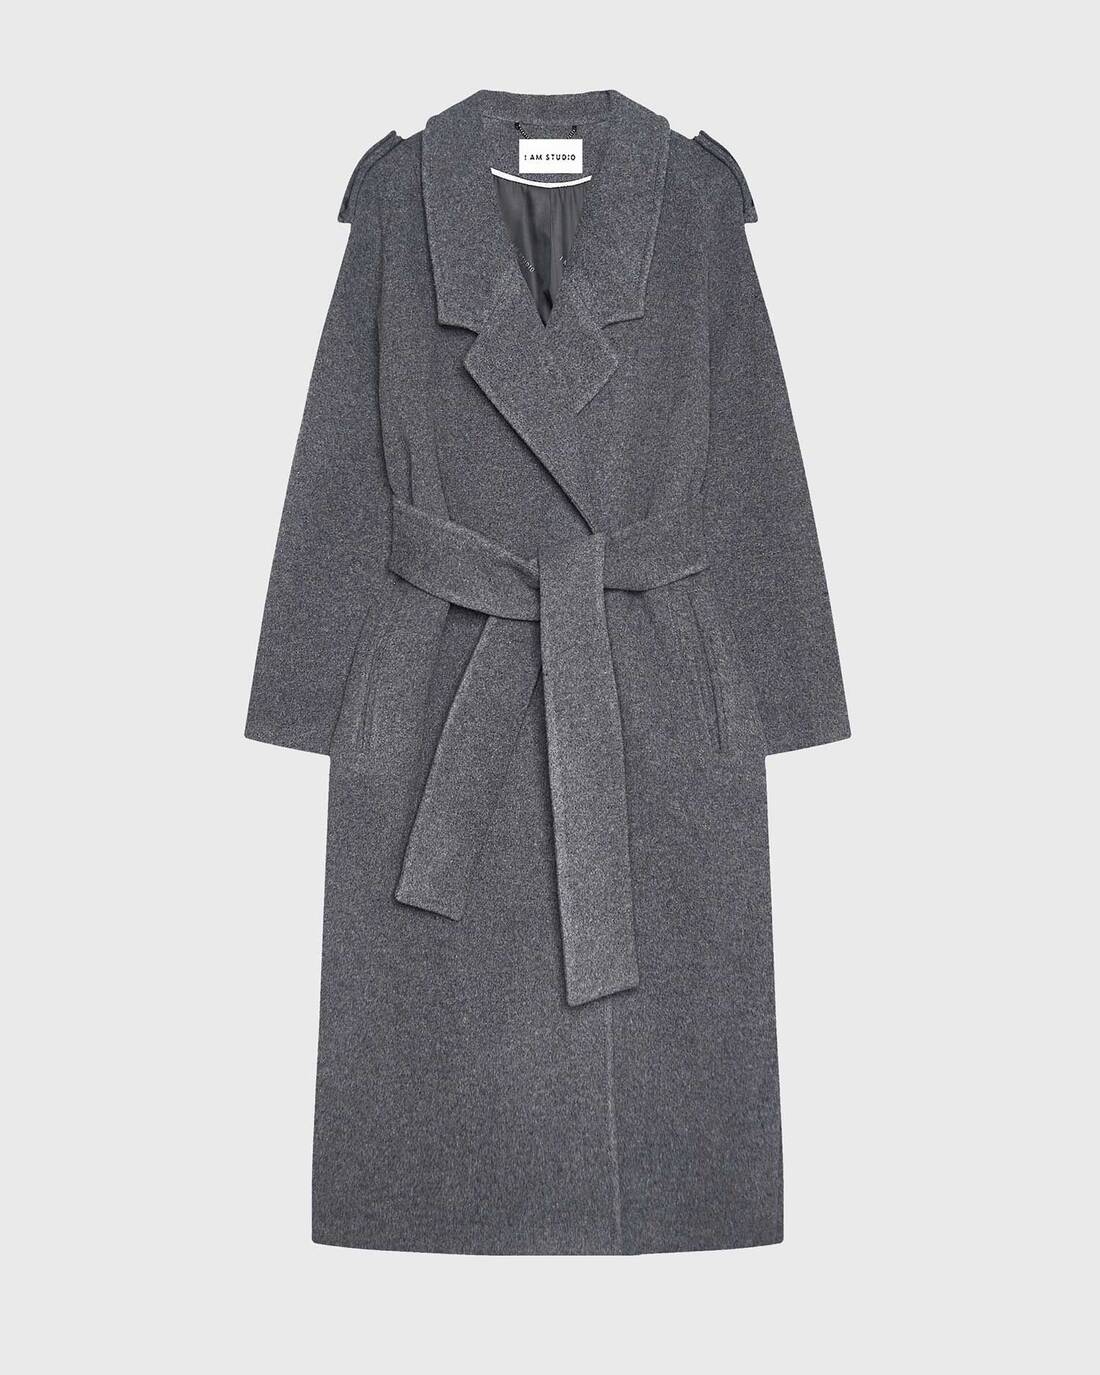 Wide belted robe coat